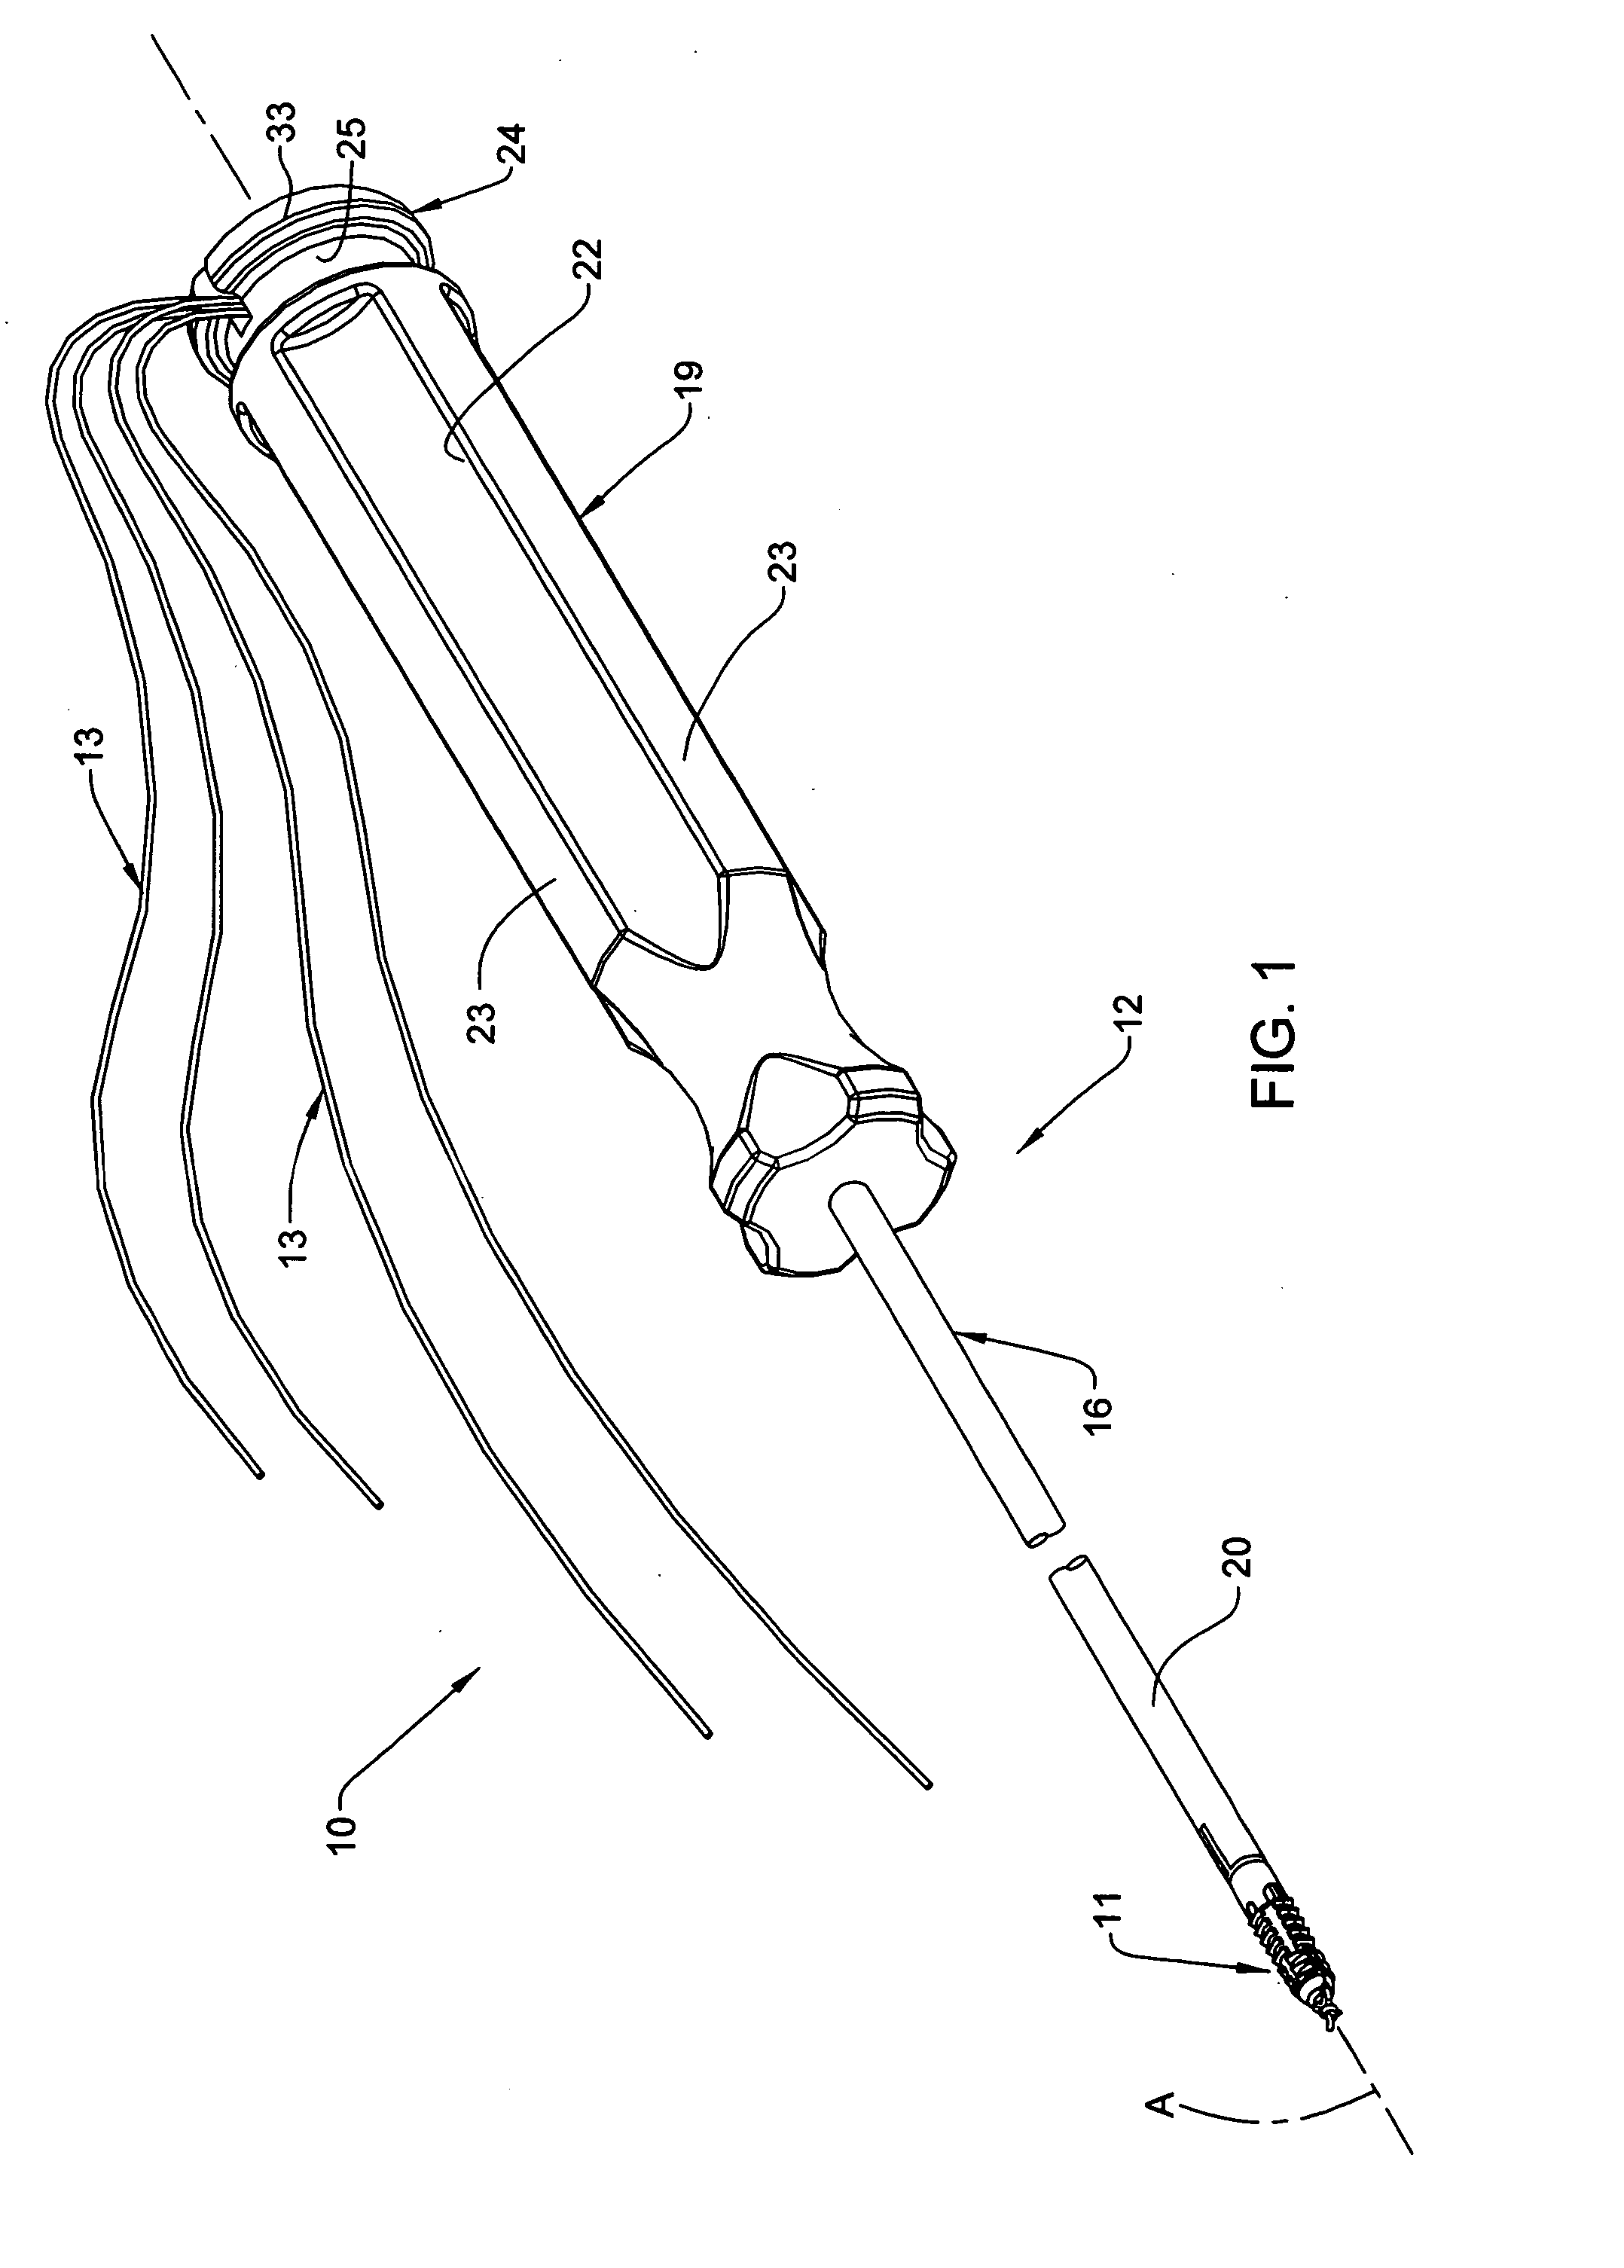 Suture anchor and inserter arrangement